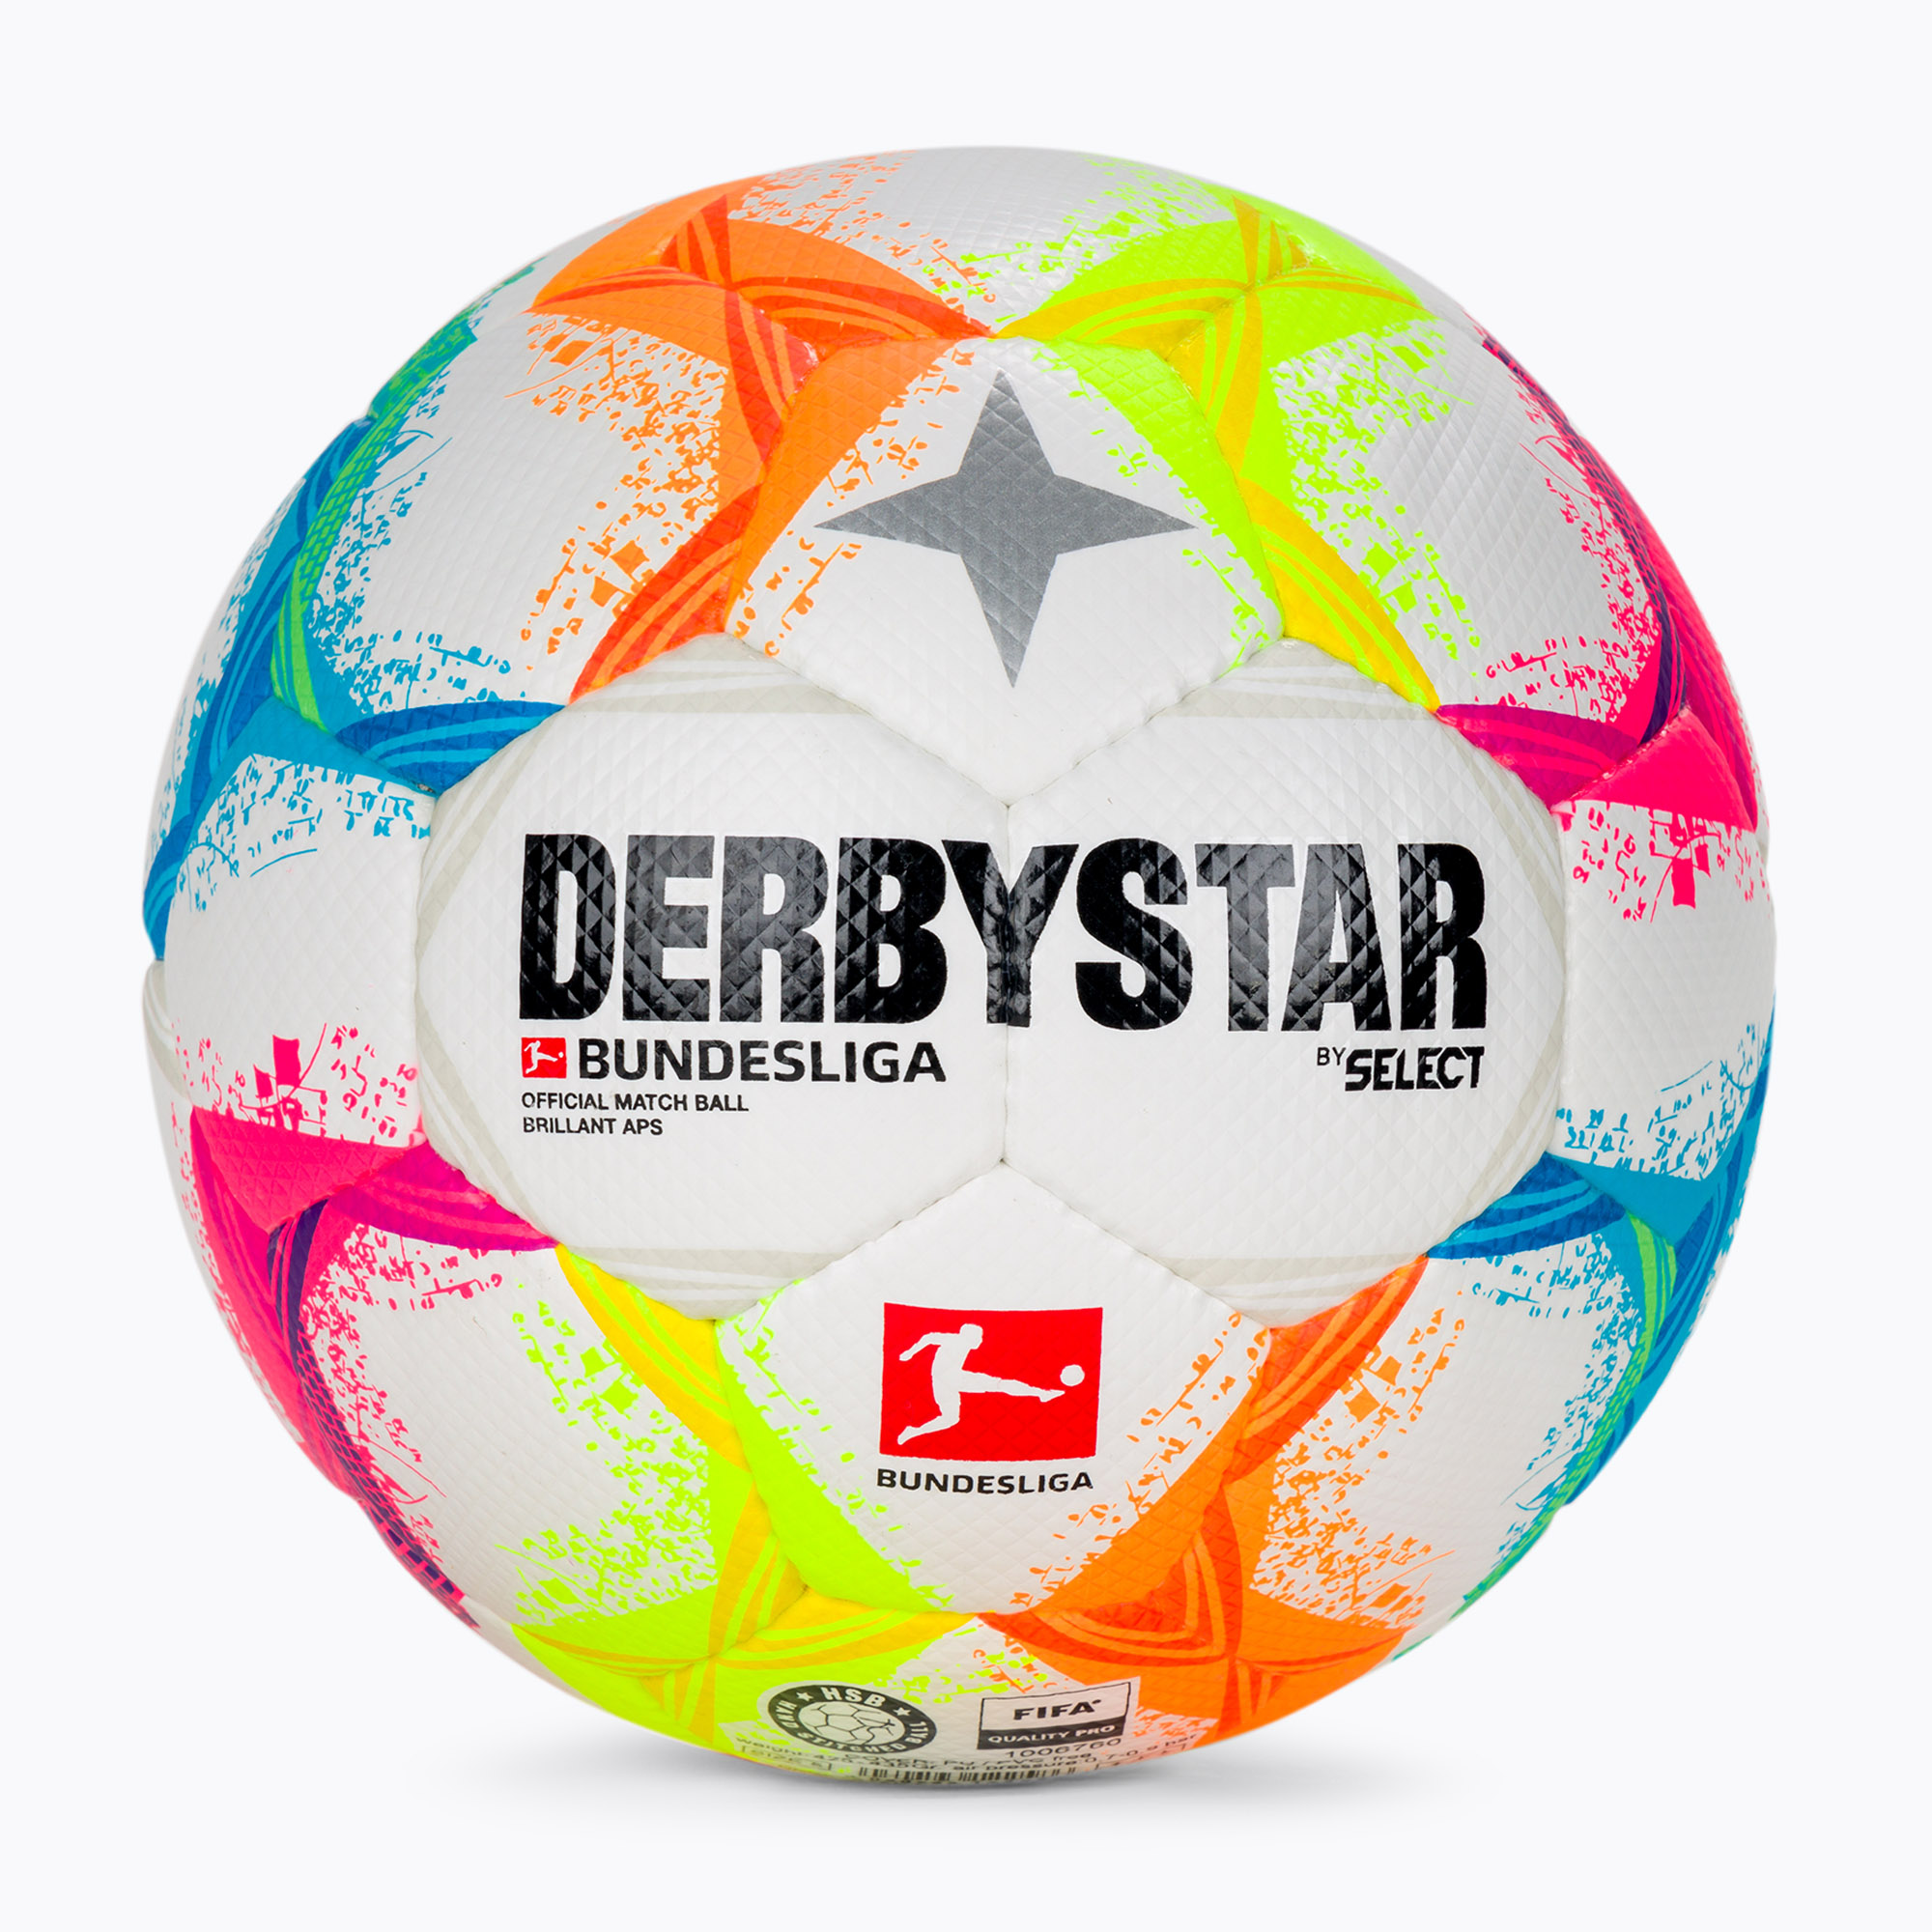 Derbystar Bundesliga Brillant APS v22 бял цвят футболна топка DE22586